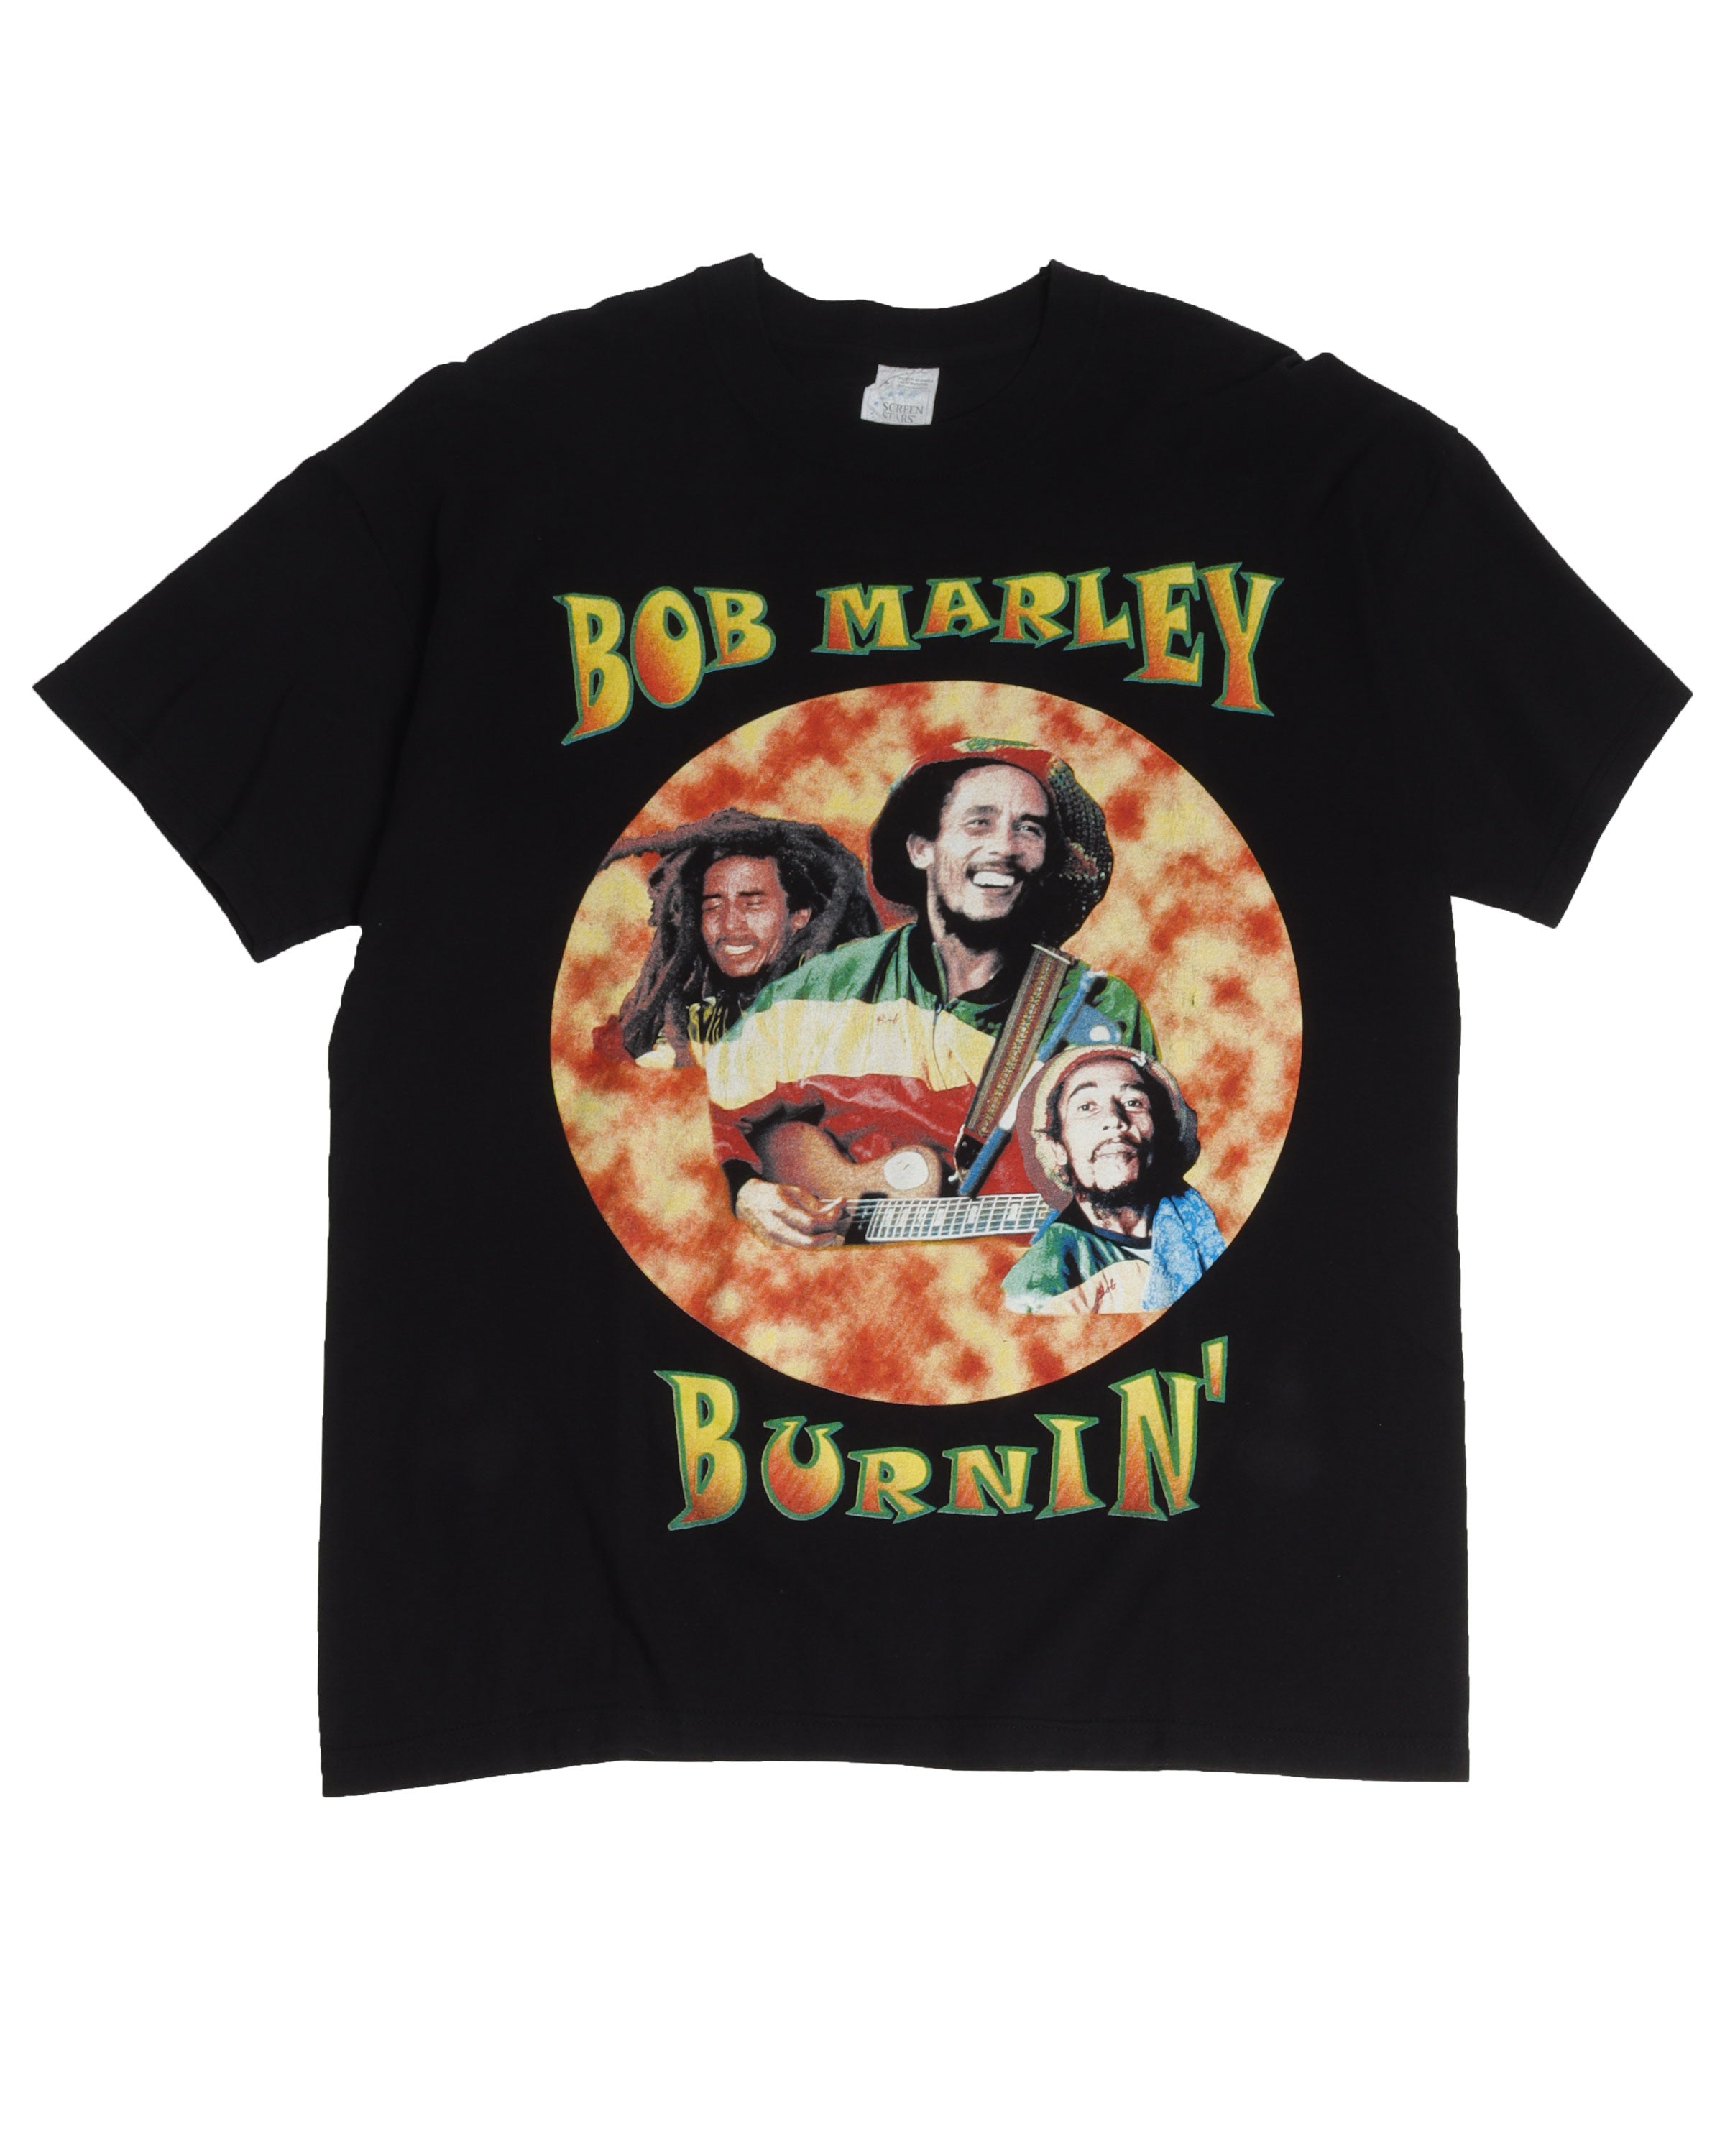 Bob Marley 'Burnin' T-Shirt